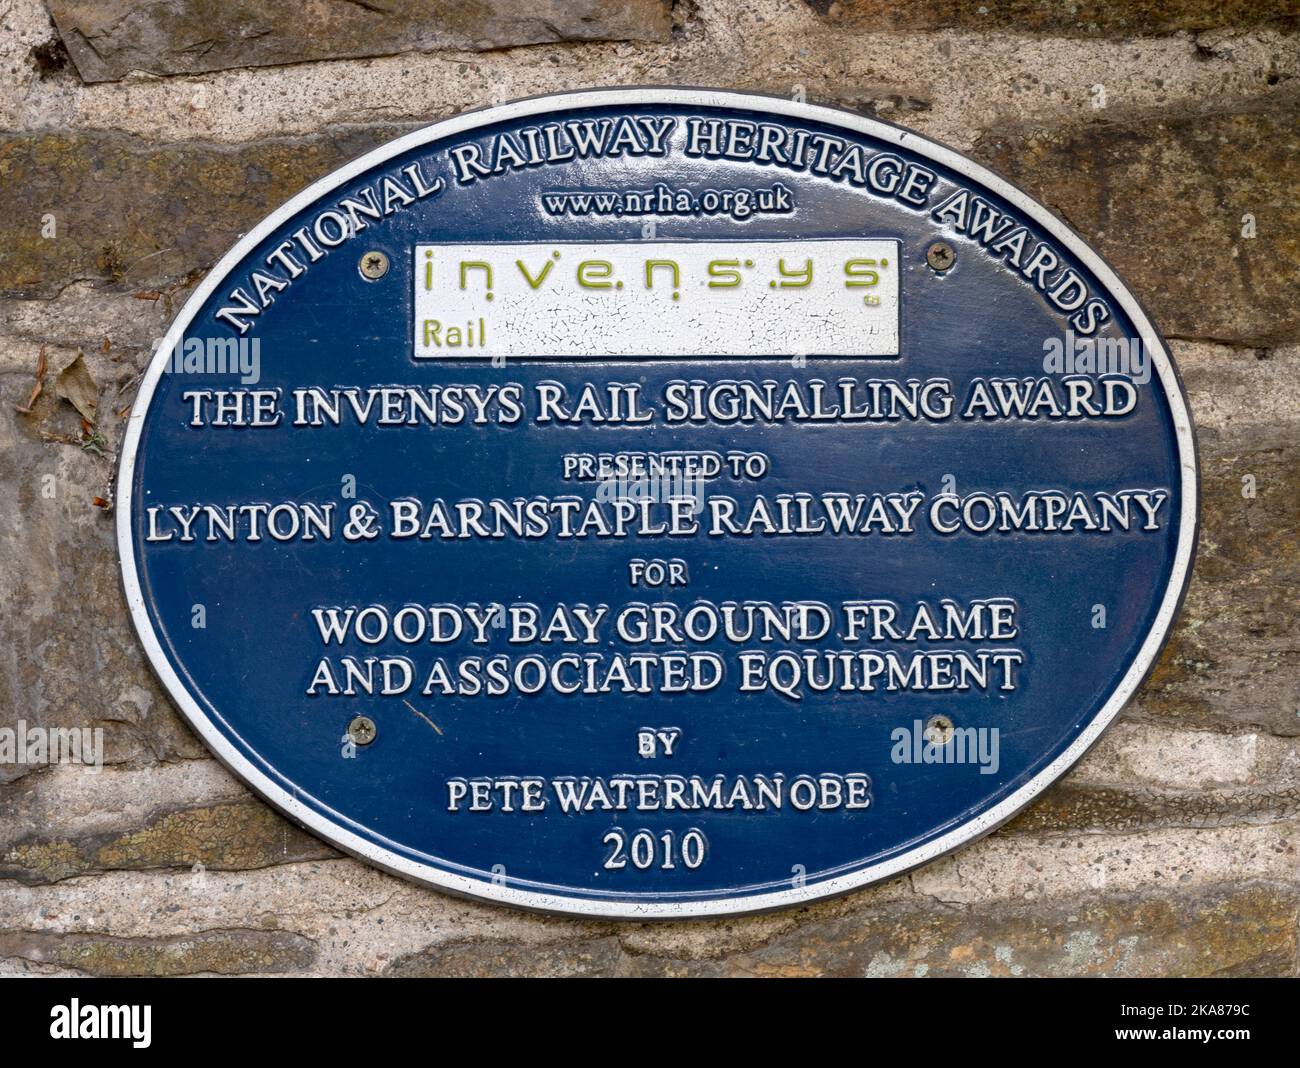 Heritage blue plaque awarded by National Railway Heritage Awards to Lynton & Barnstaple Railway Company at Woody Bay Railway Station, Devon, UK Stock Photo